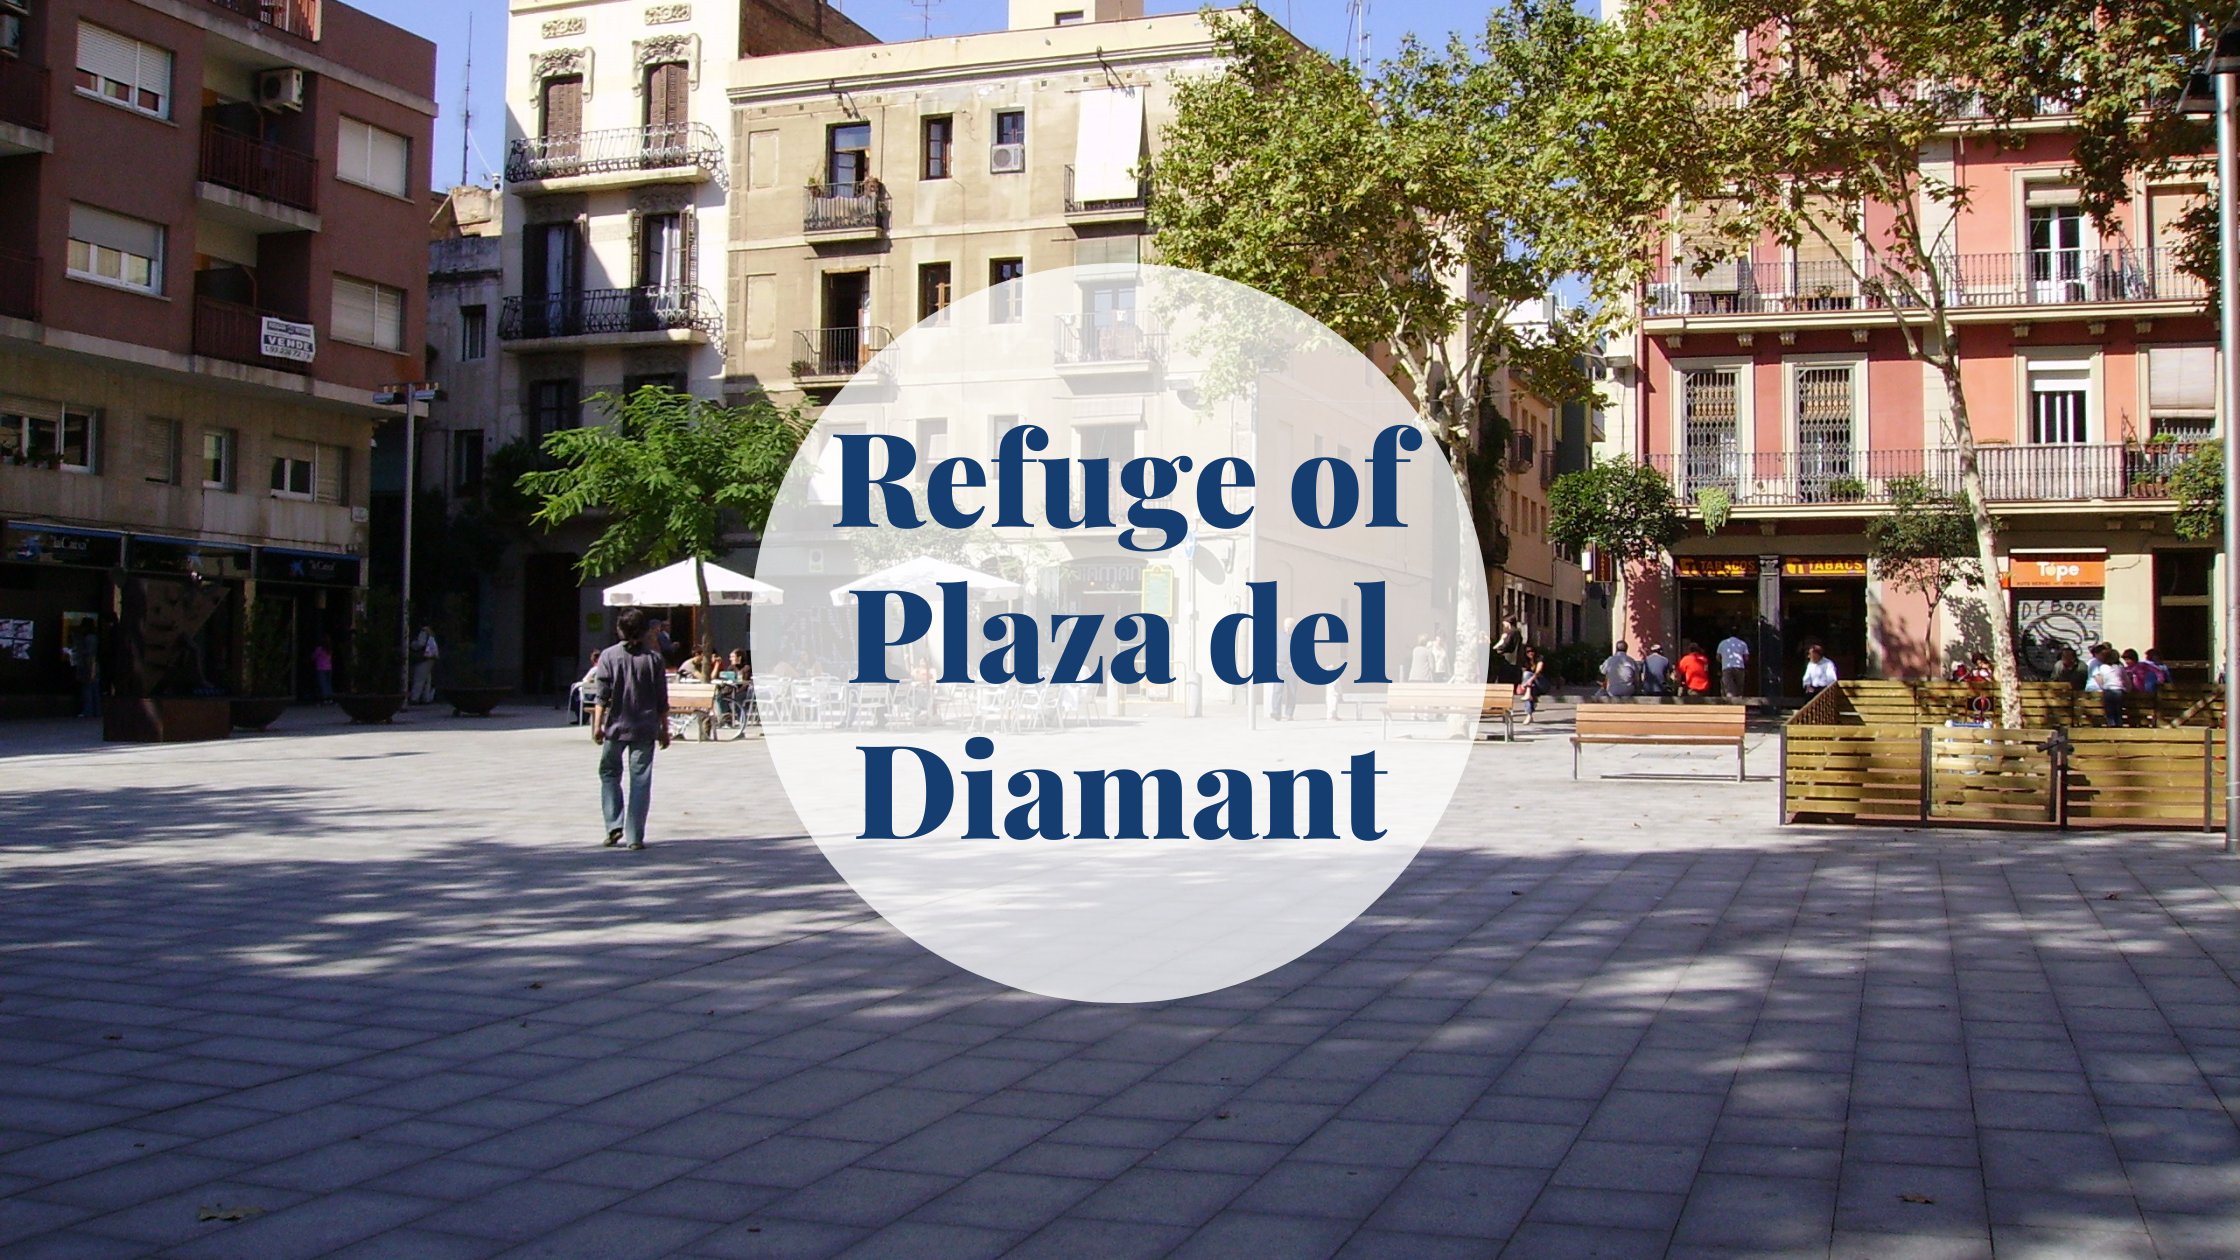 Refuge of Plaza del Diamant